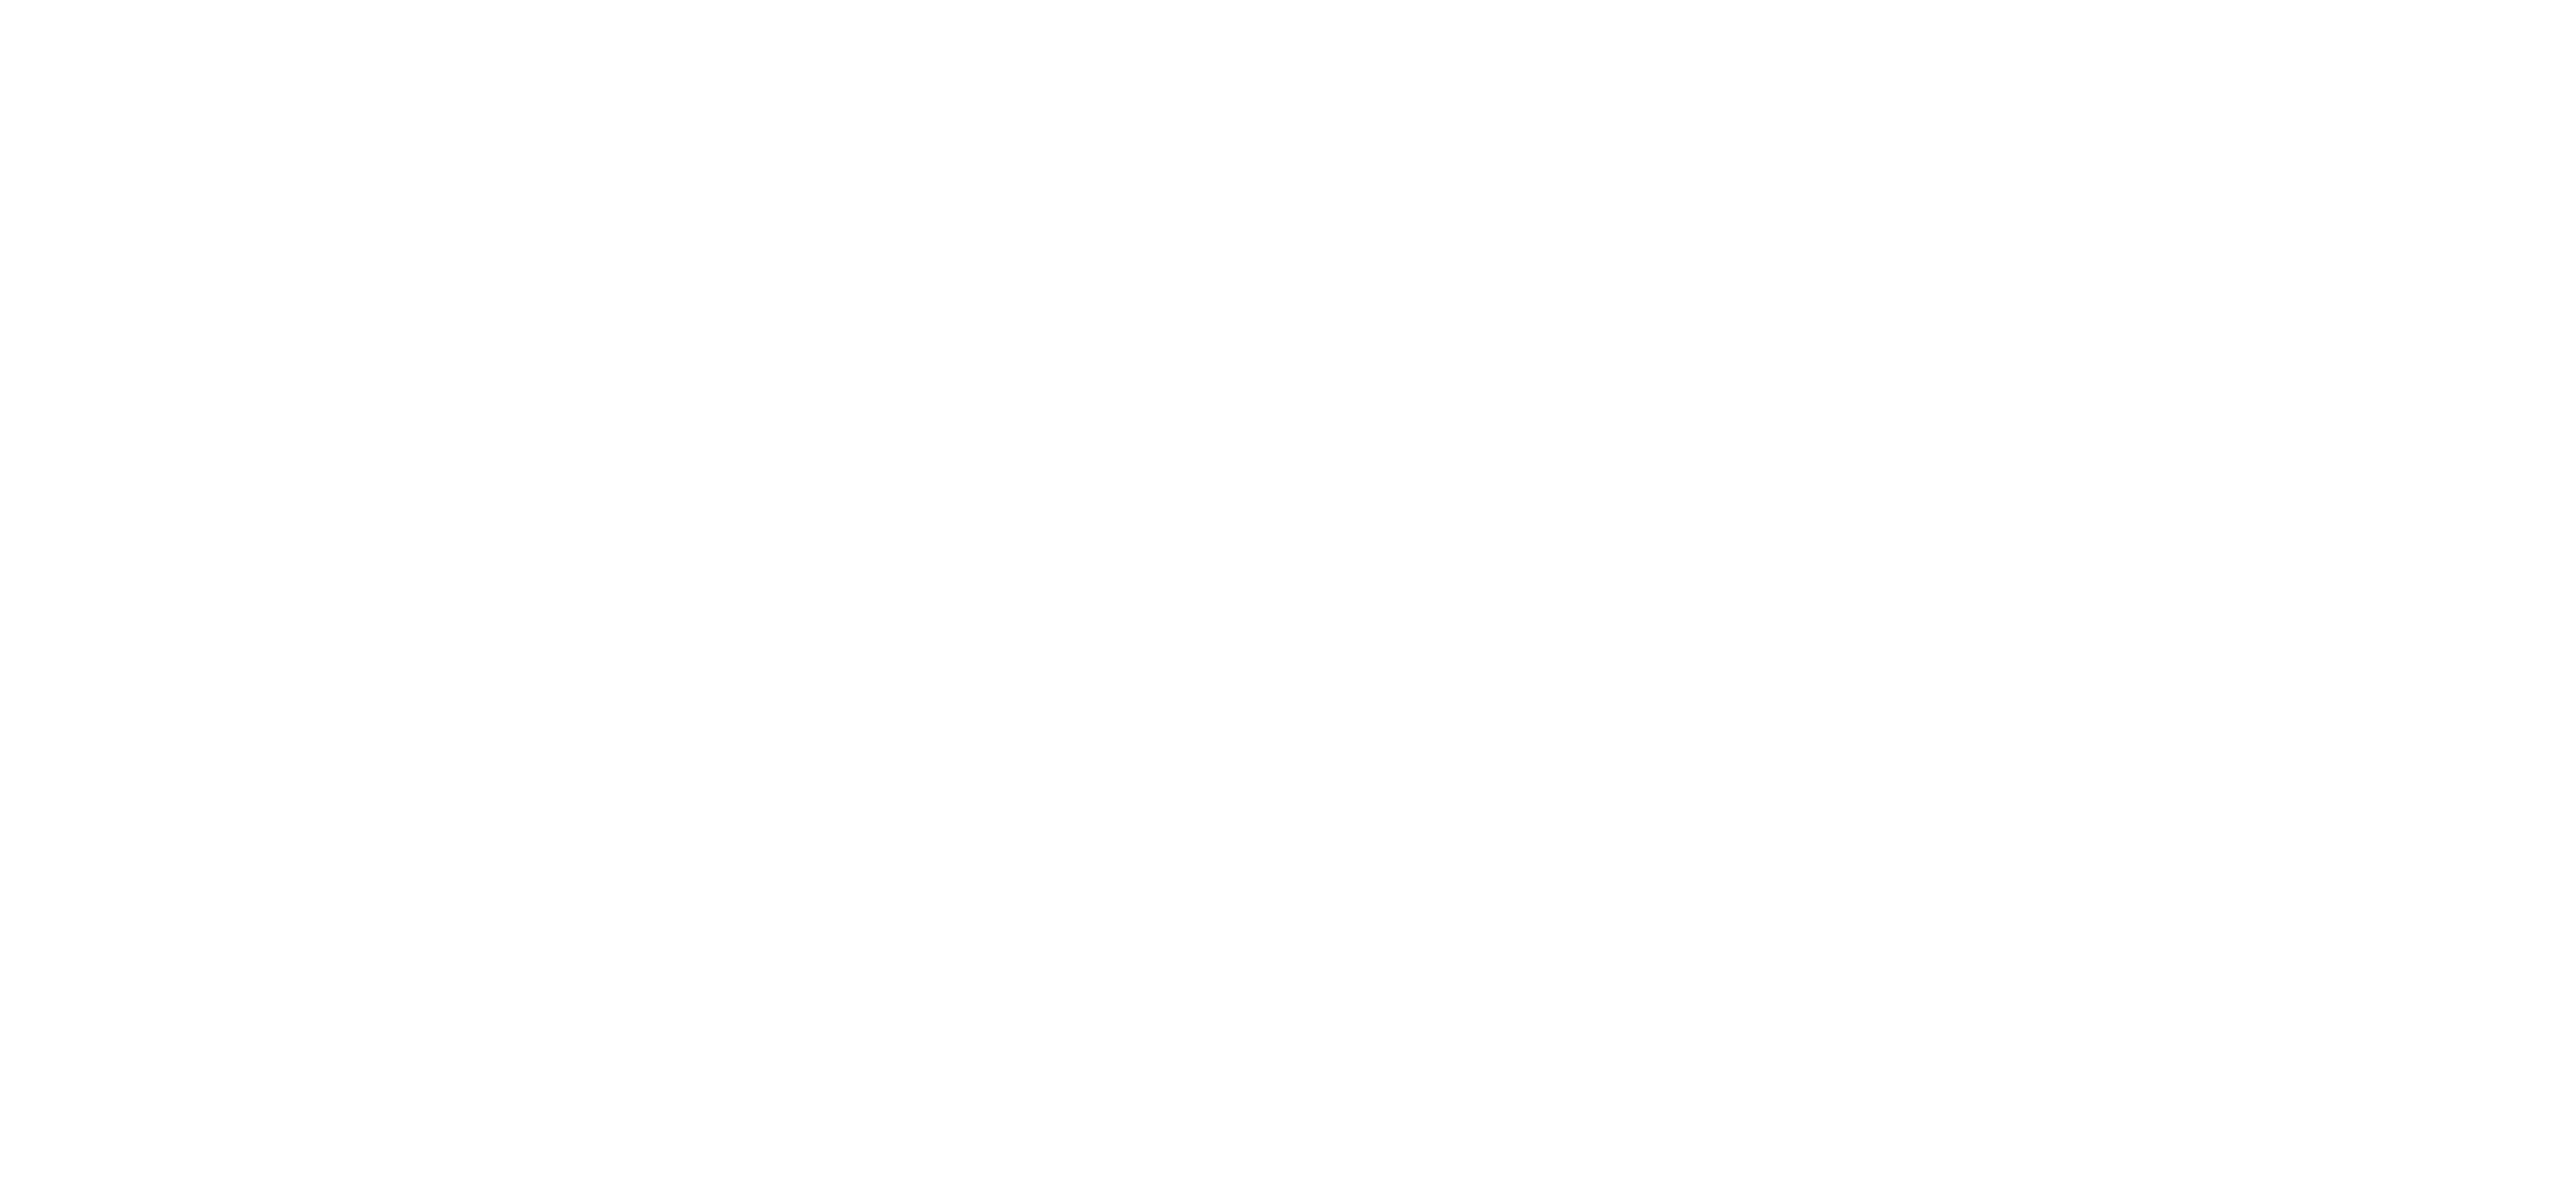 Mission Rock corporate logo